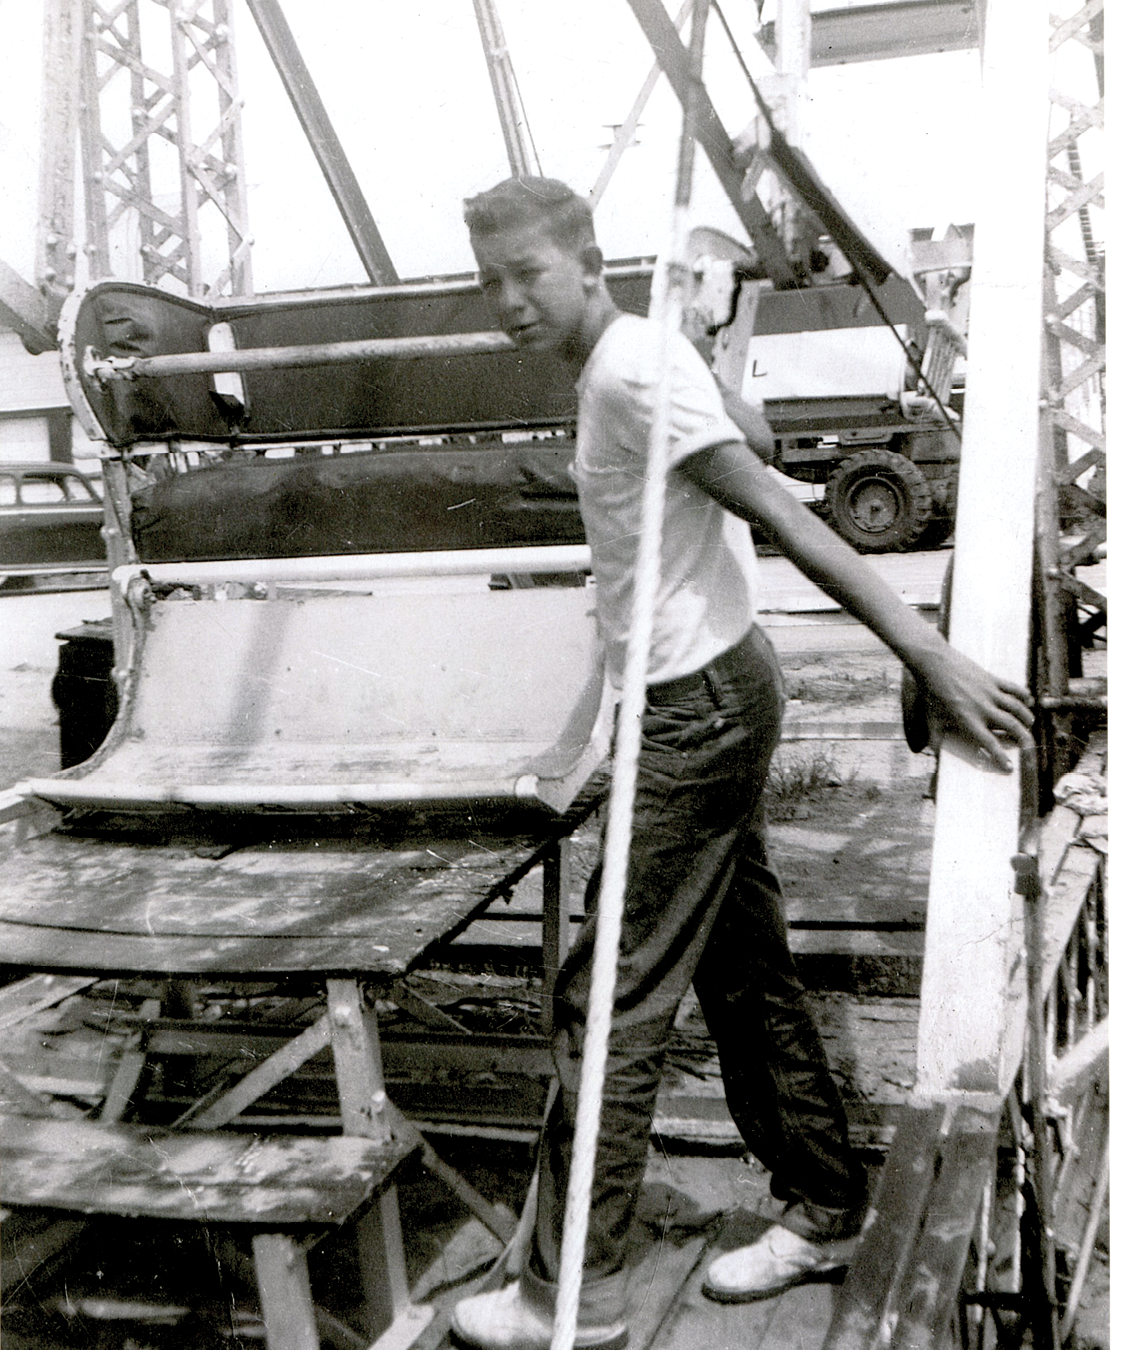 Robert Knight working the Ferris wheel in 1956